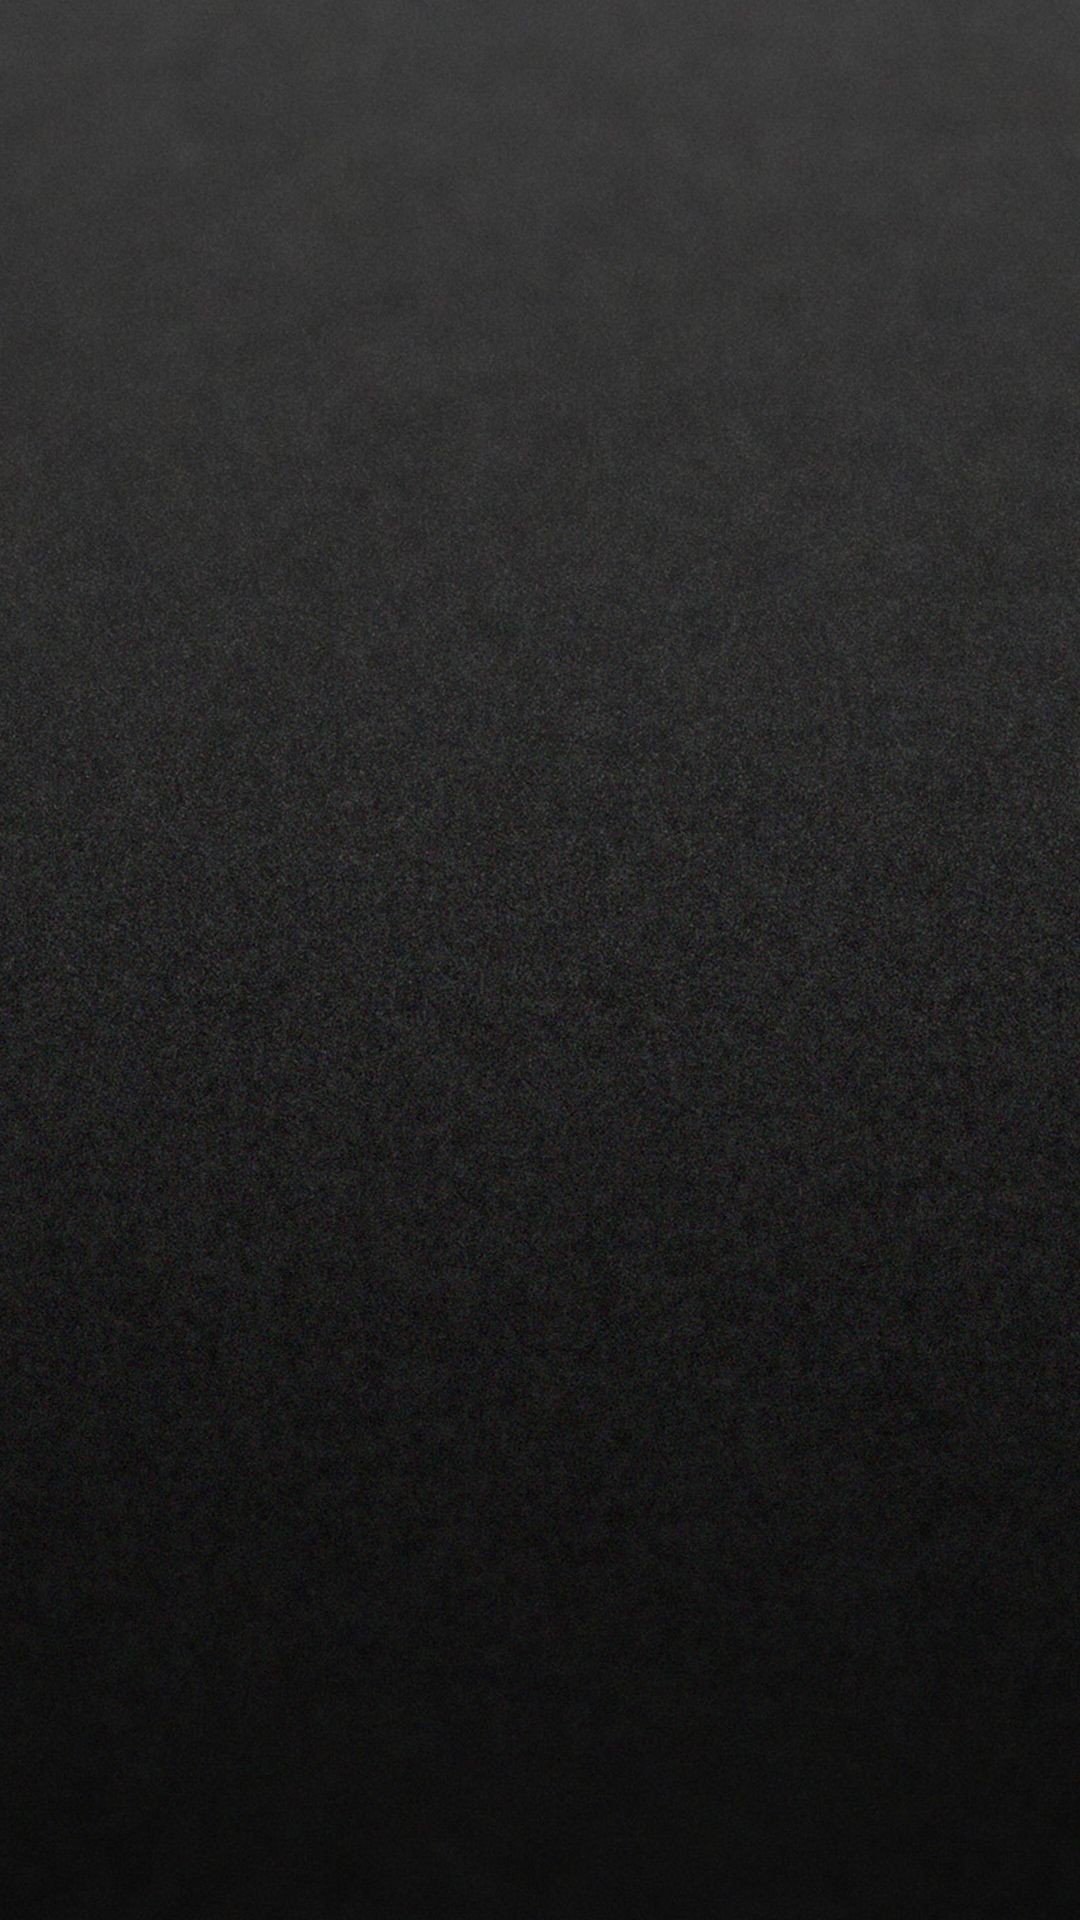 1080x1920 Wallpapers for Galaxy - Carbon Fiber Texture Wallpaper